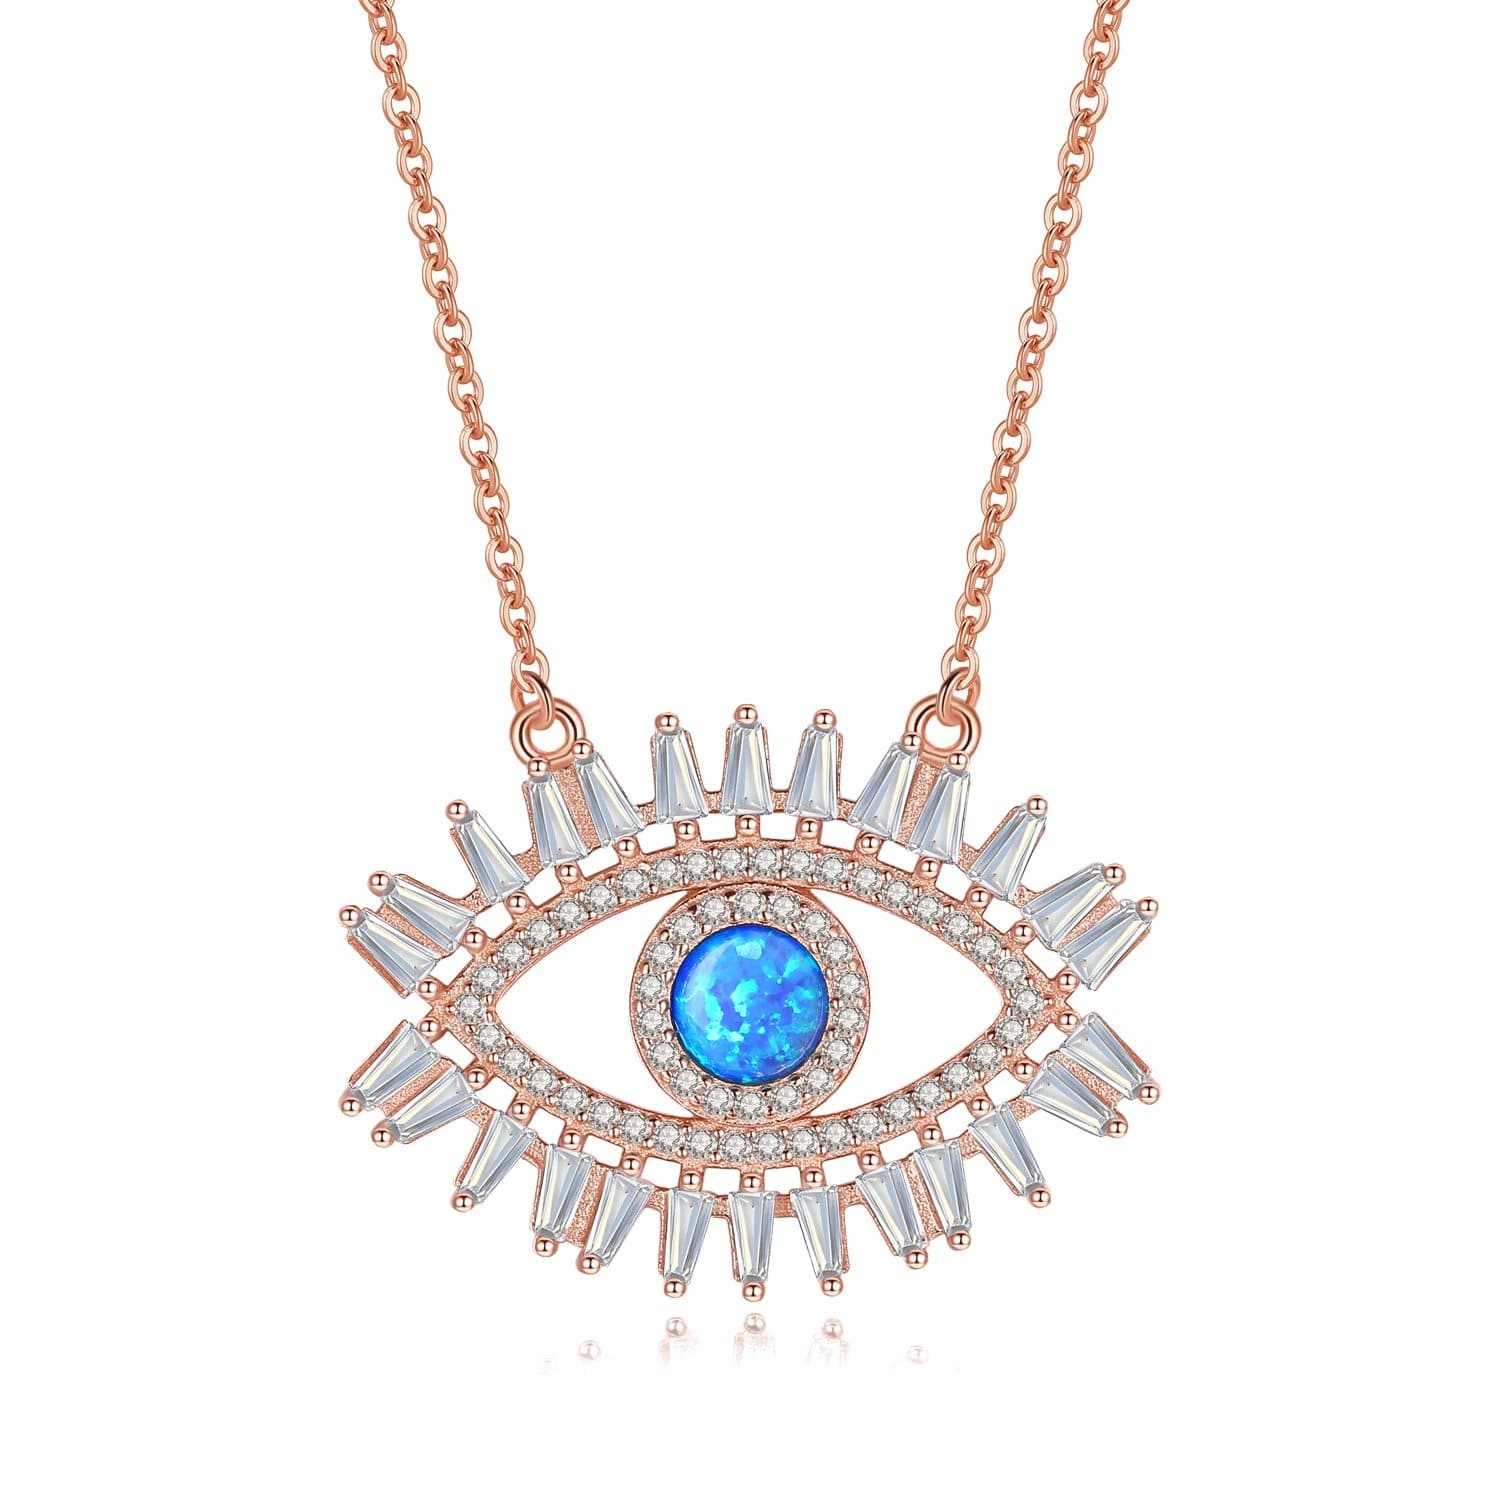 Shop for Blue Sapphire Silver Necklace - Lifesutram